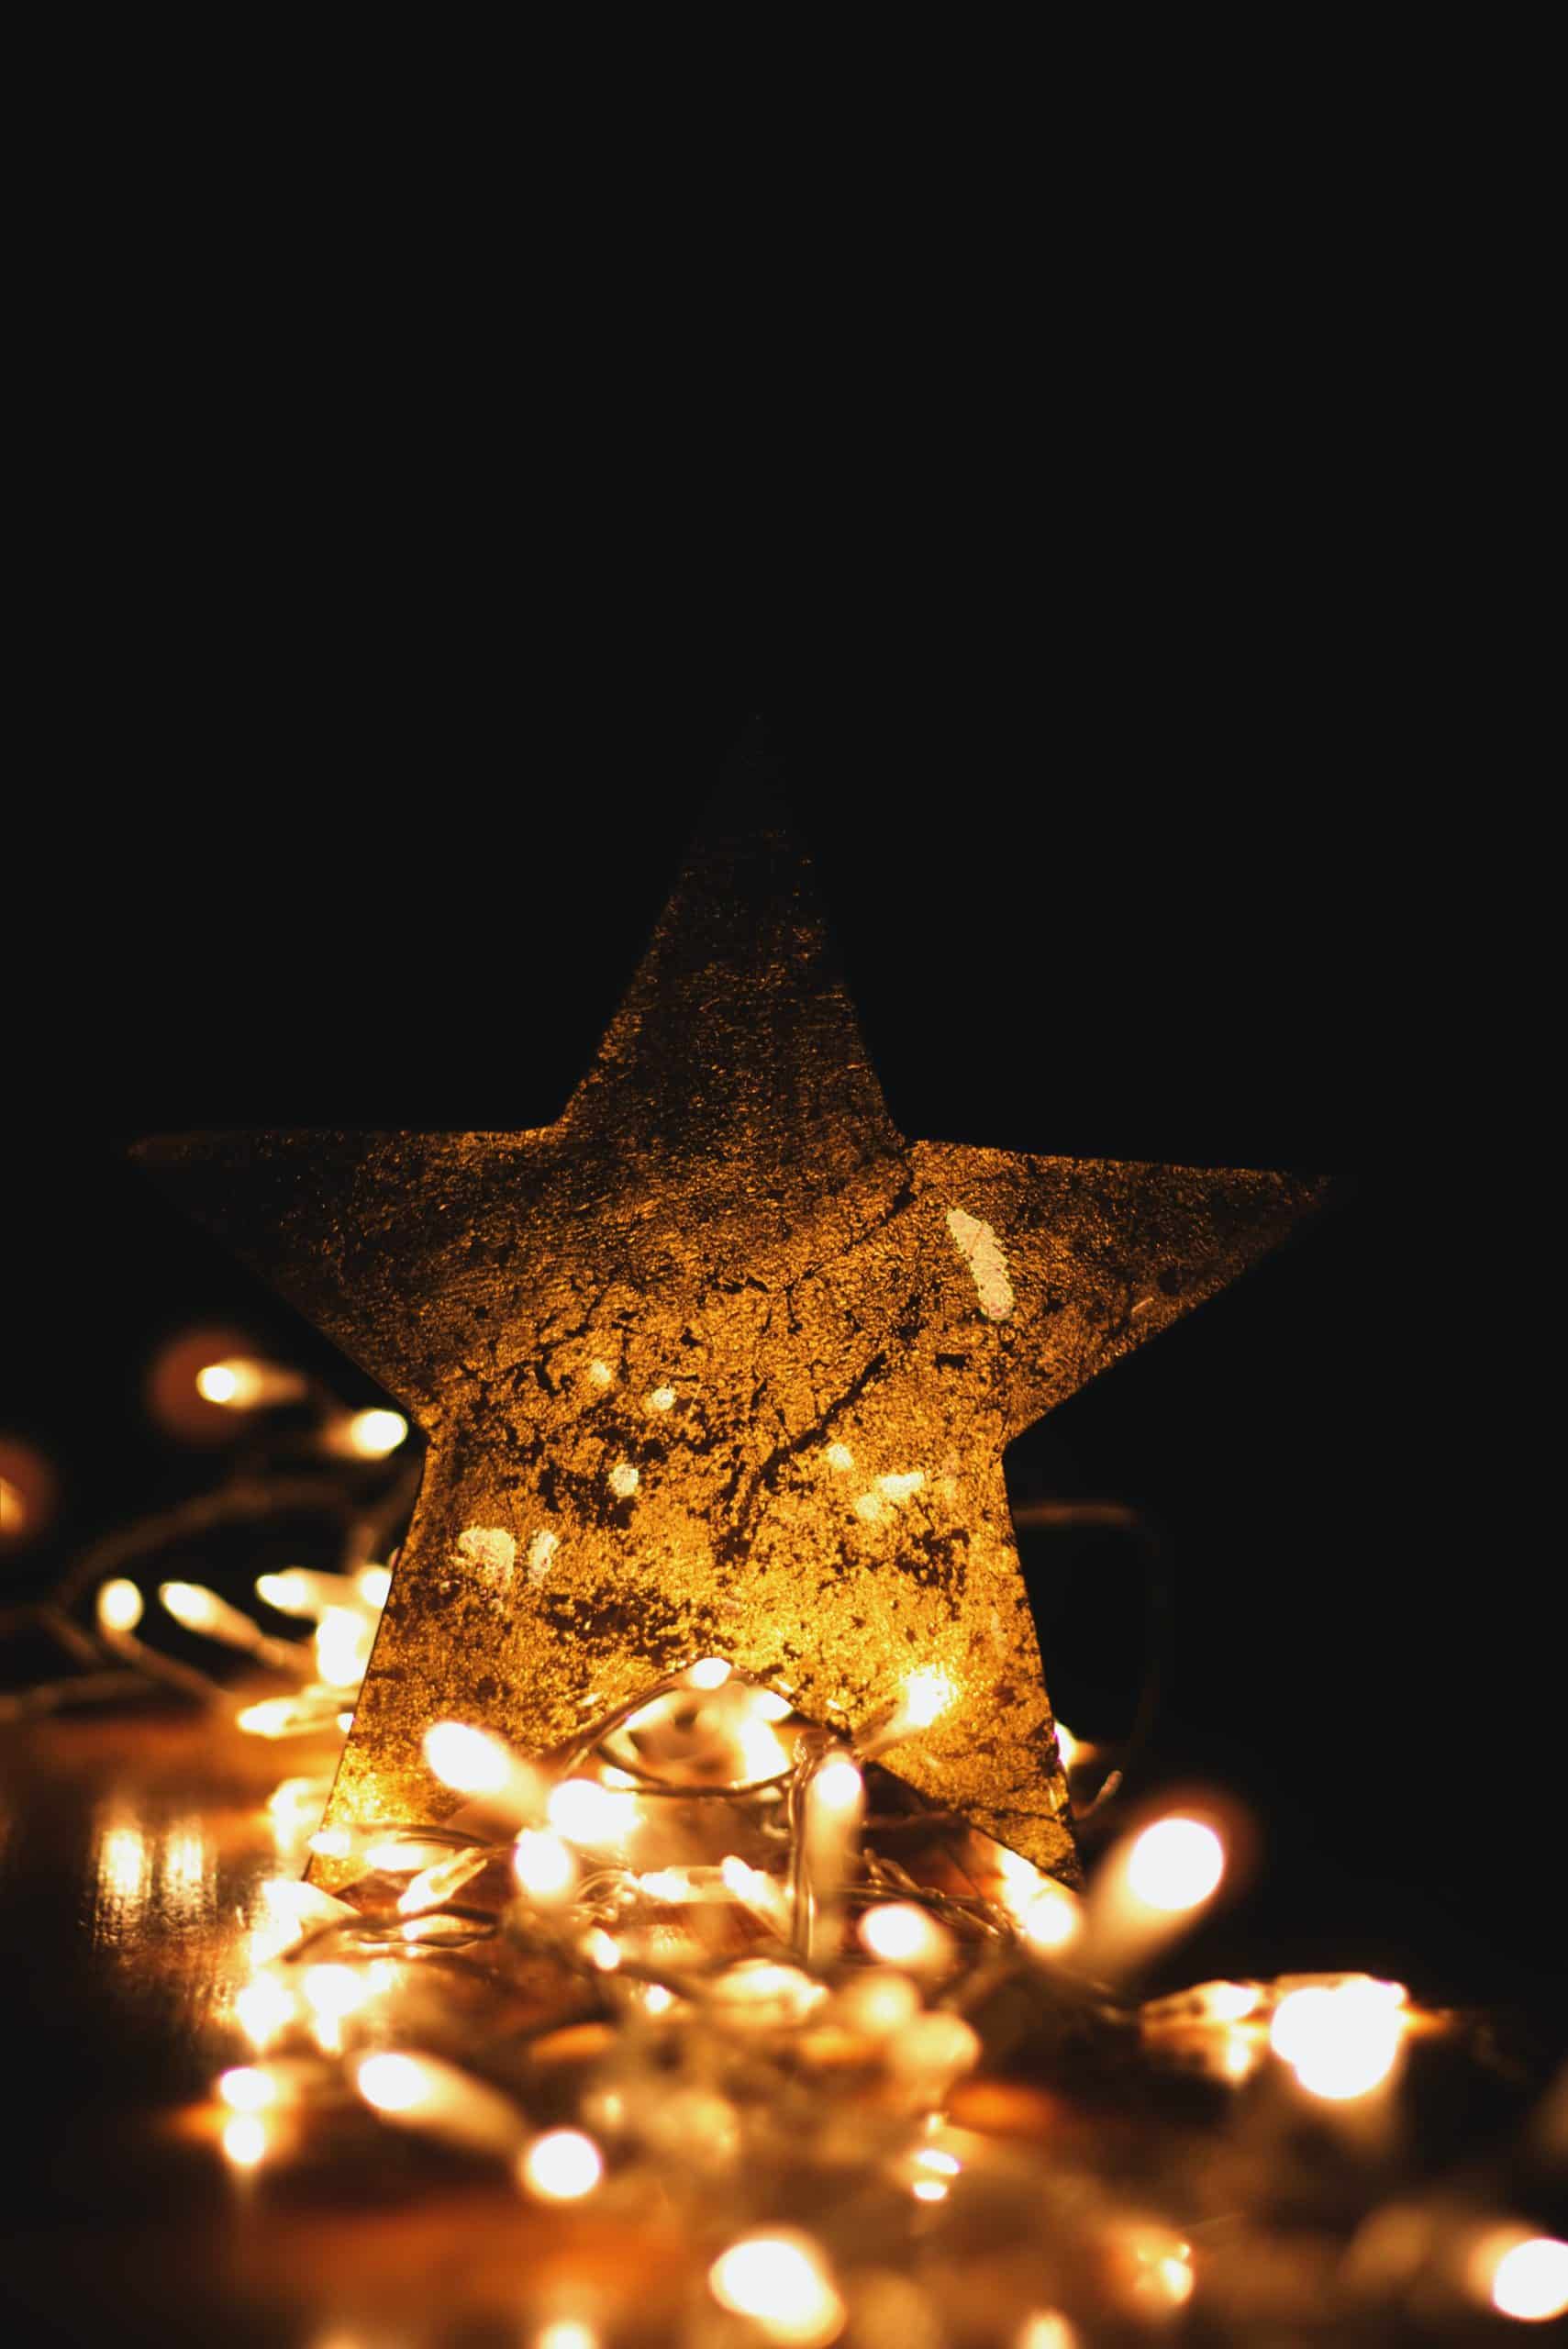 Christmas lights with a lit star